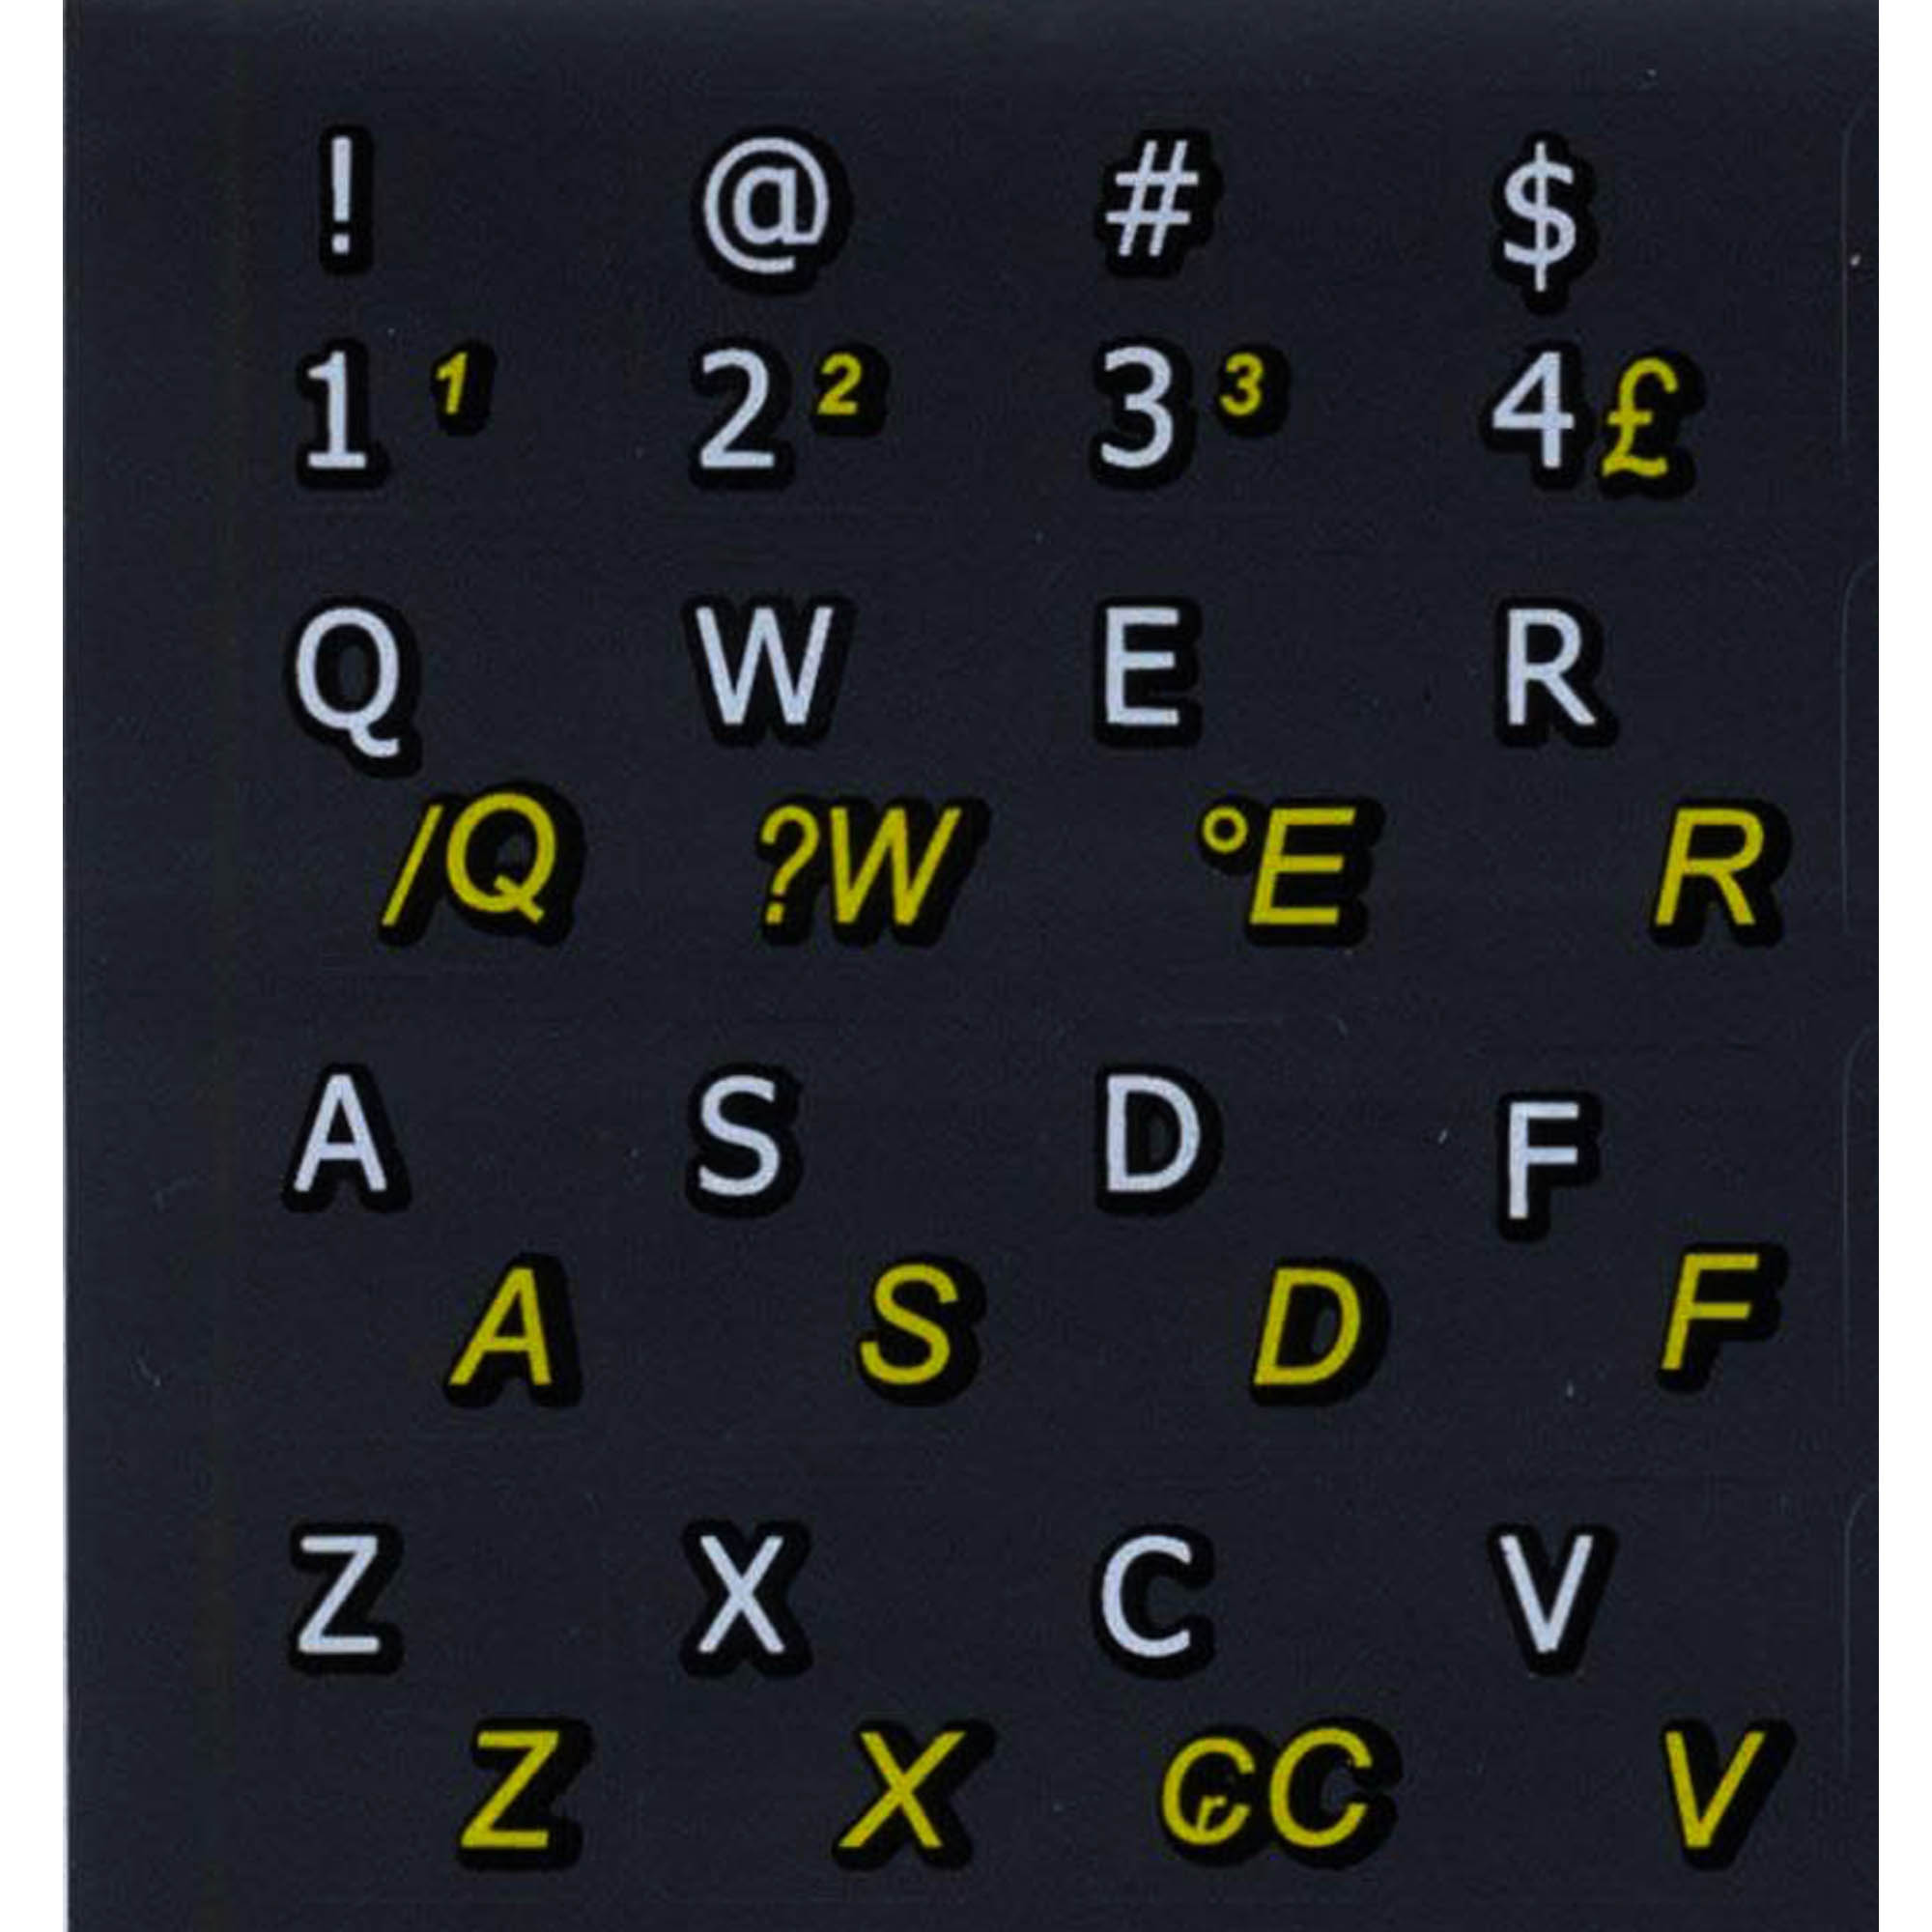 Brazilian Portuguese English keyboard stickers non transparent black